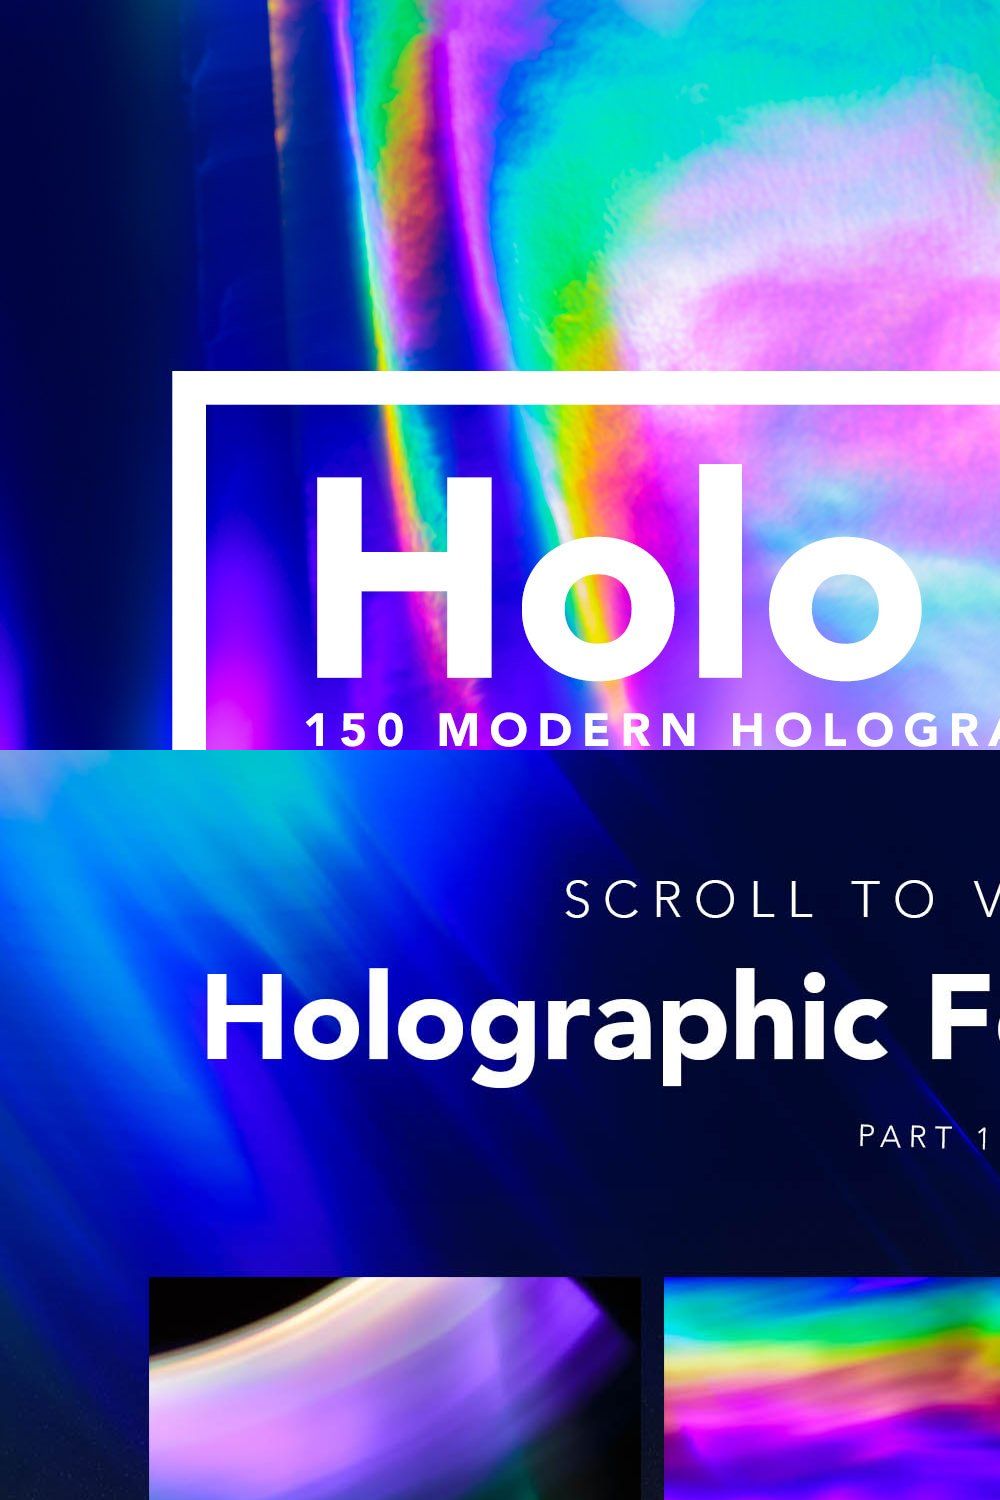 Holo Foil - Holographic Textures pinterest preview image.